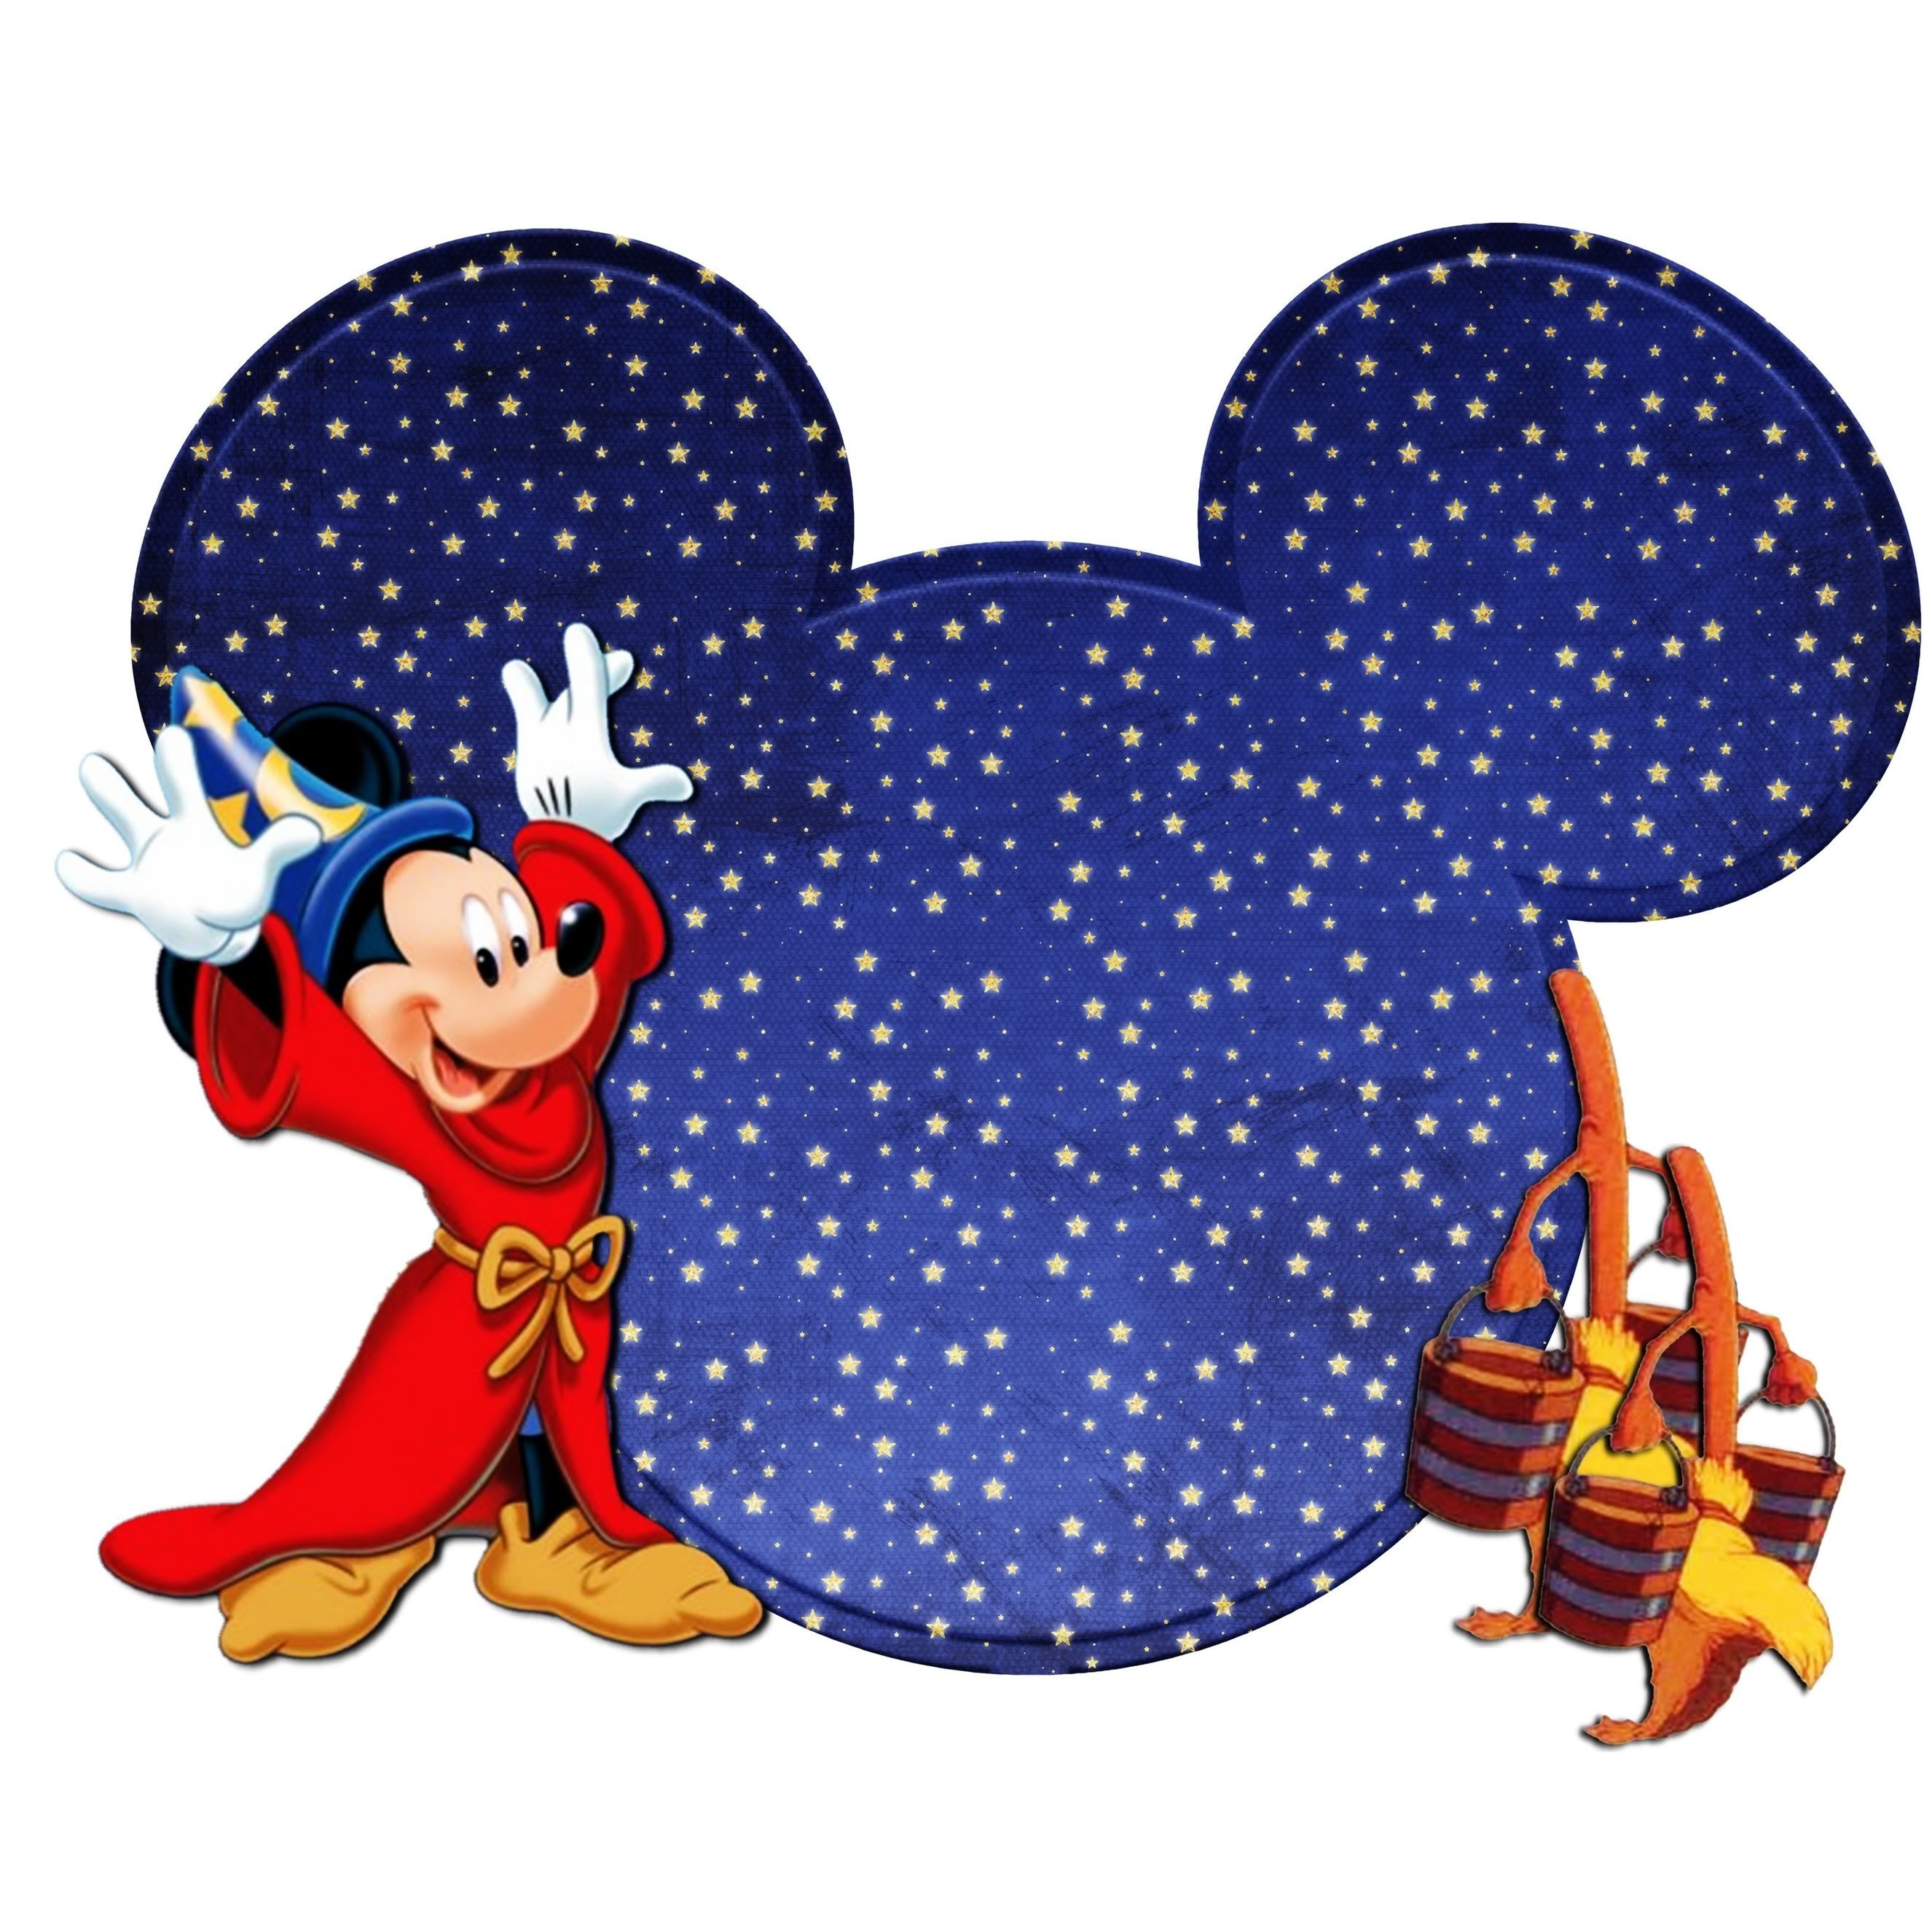 Disney fantasia sorcerer Mickey Mouse.